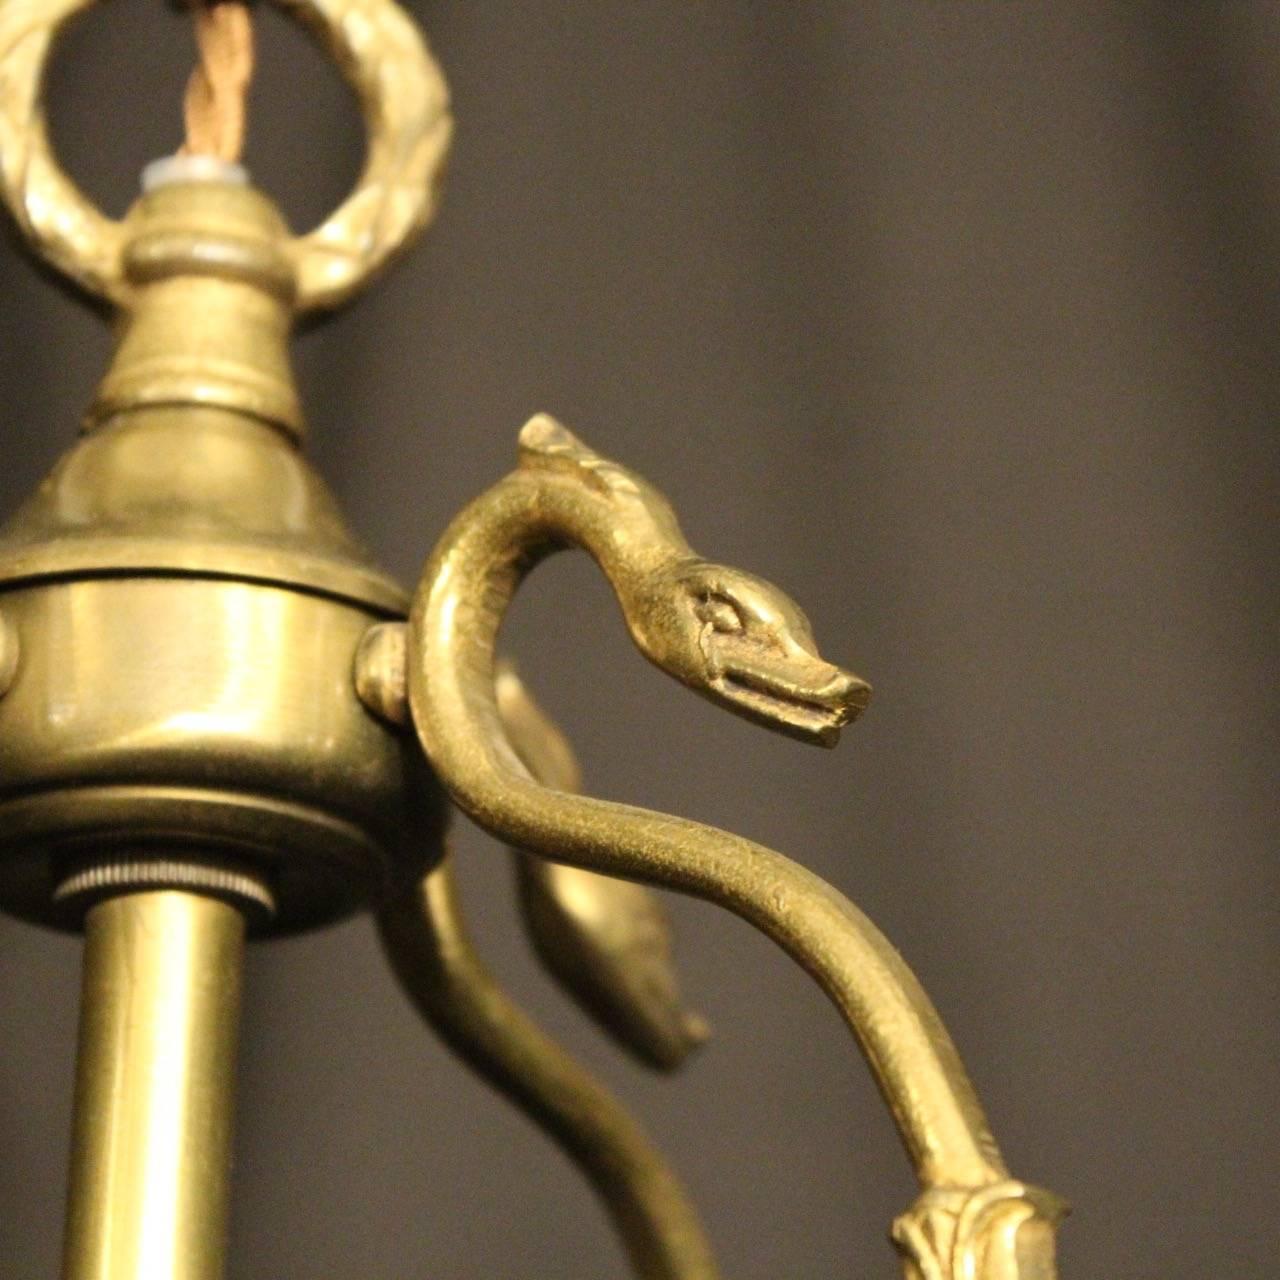 20th Century French Gilded Empire Convex Antique Hall Lantern